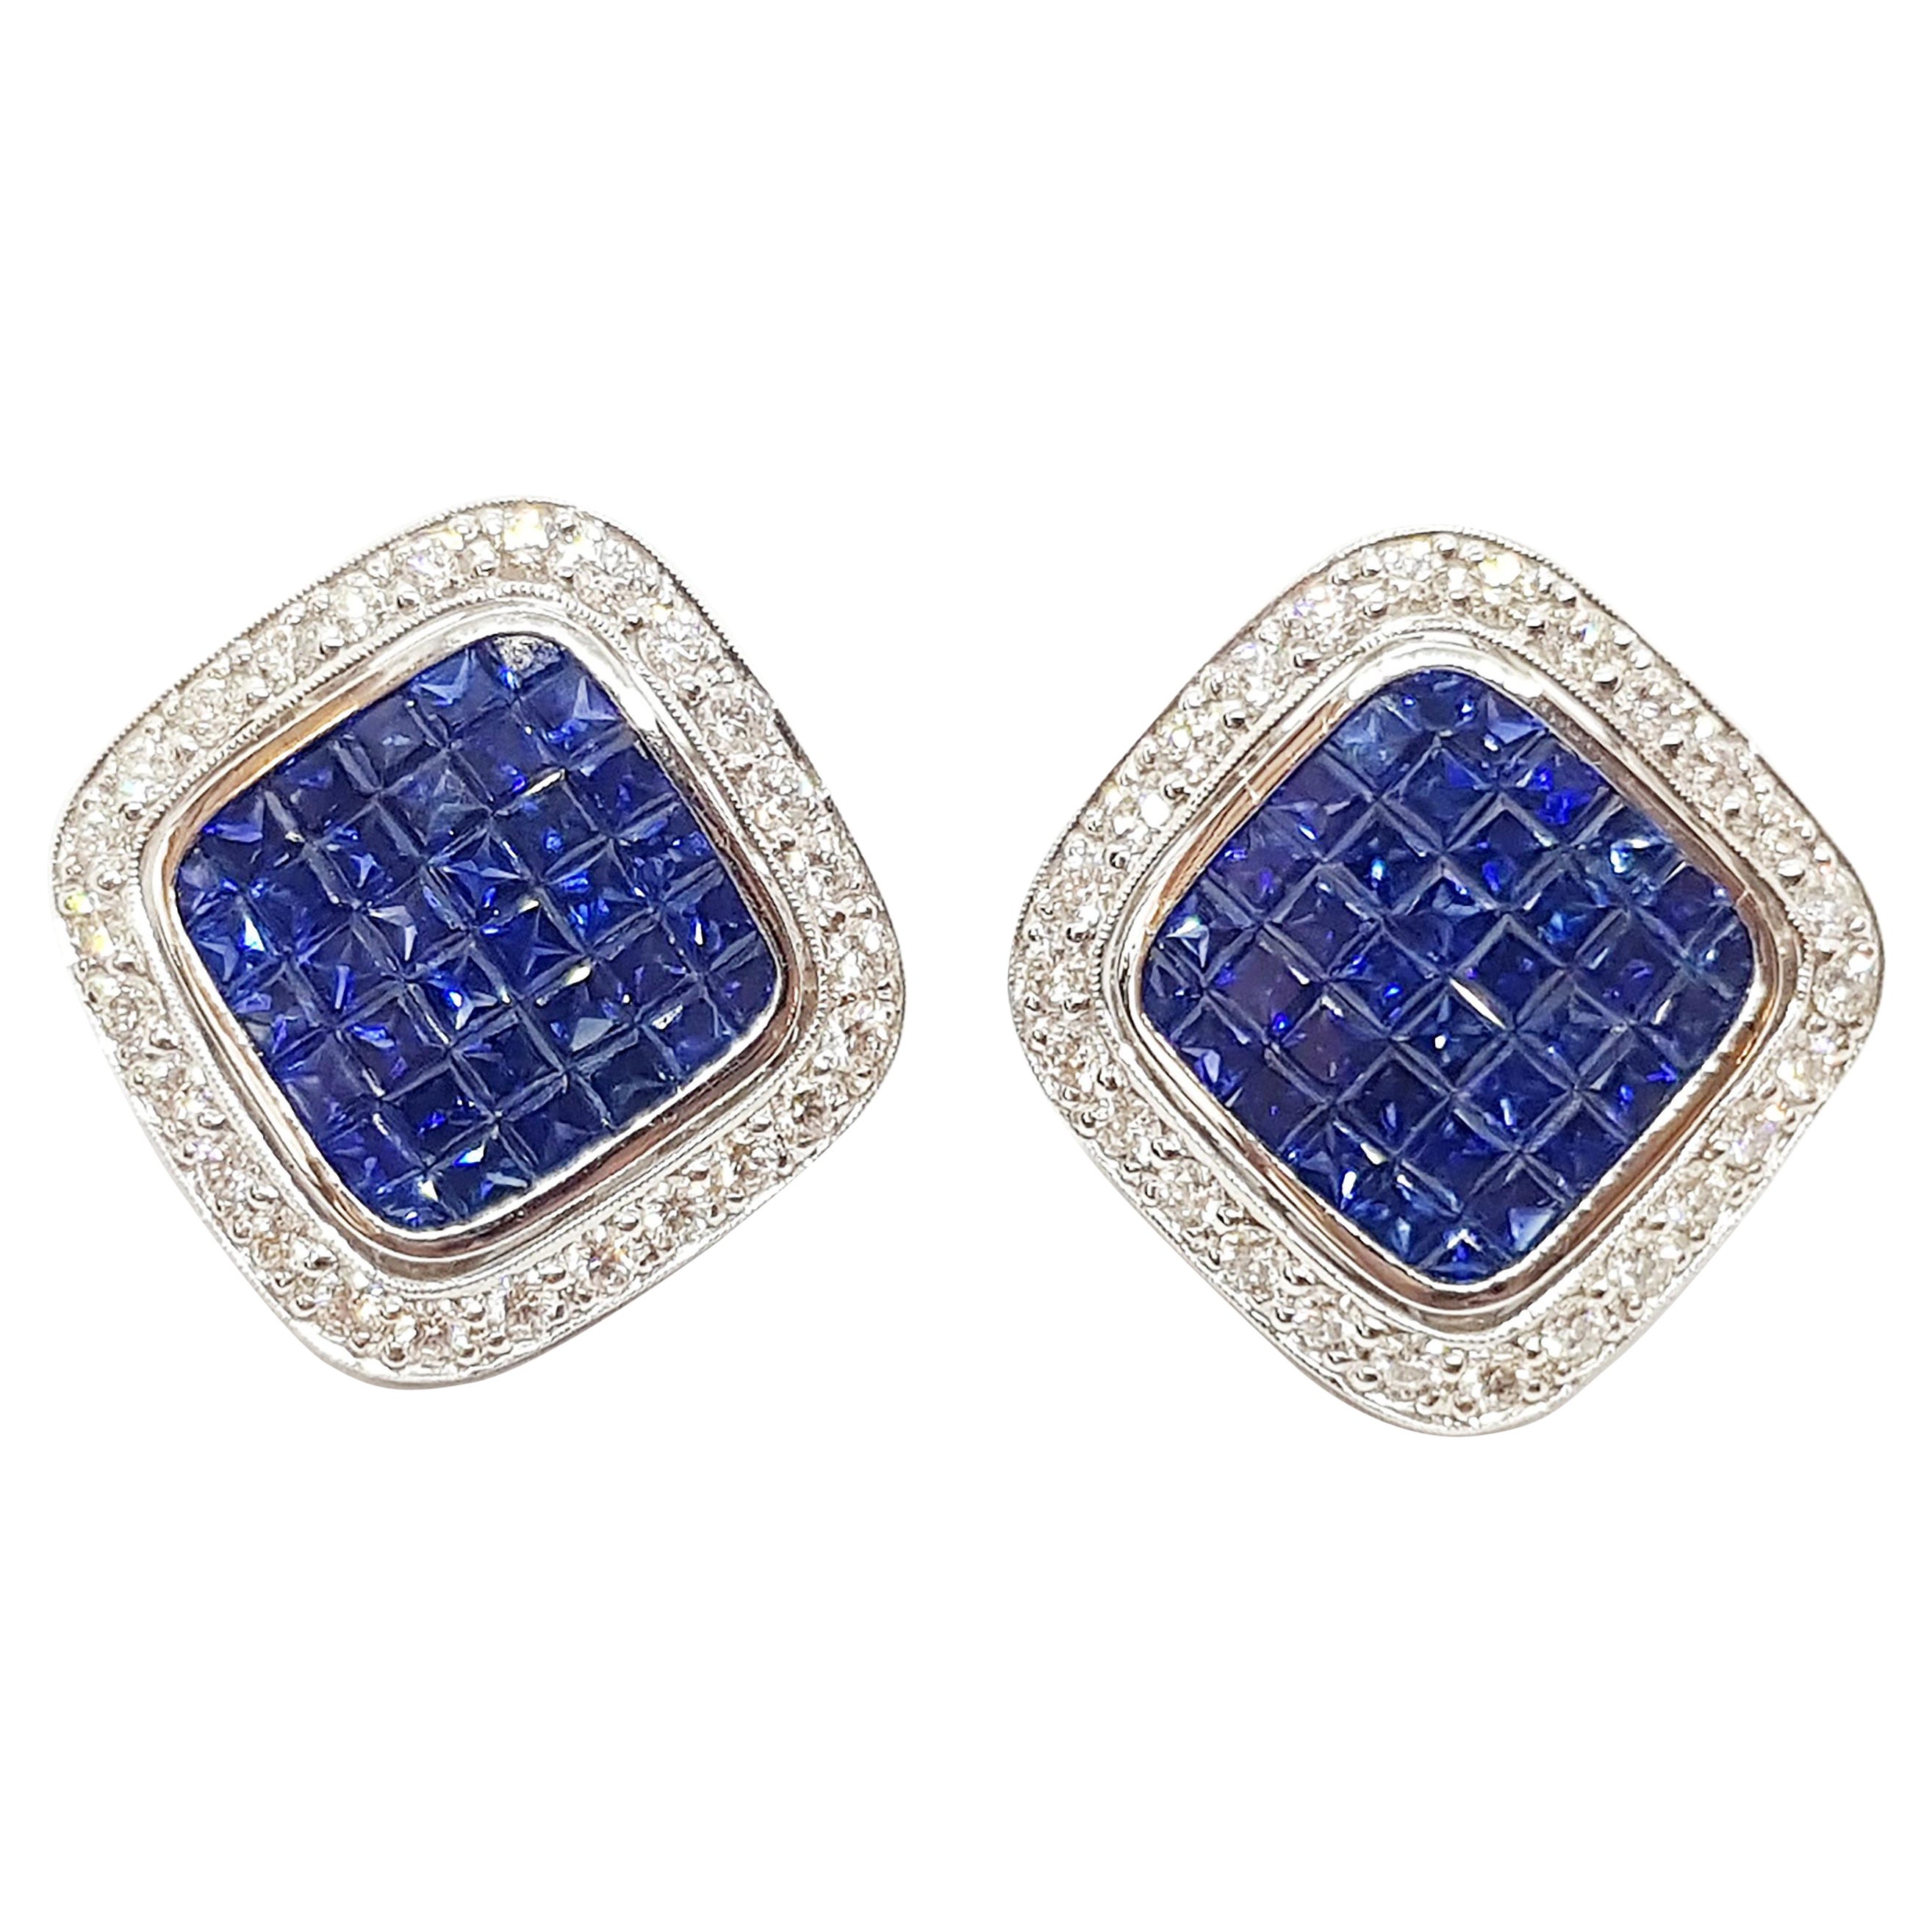 Blue Sapphire with Diamond Earrings Set in 18 Karat White Gold Settings